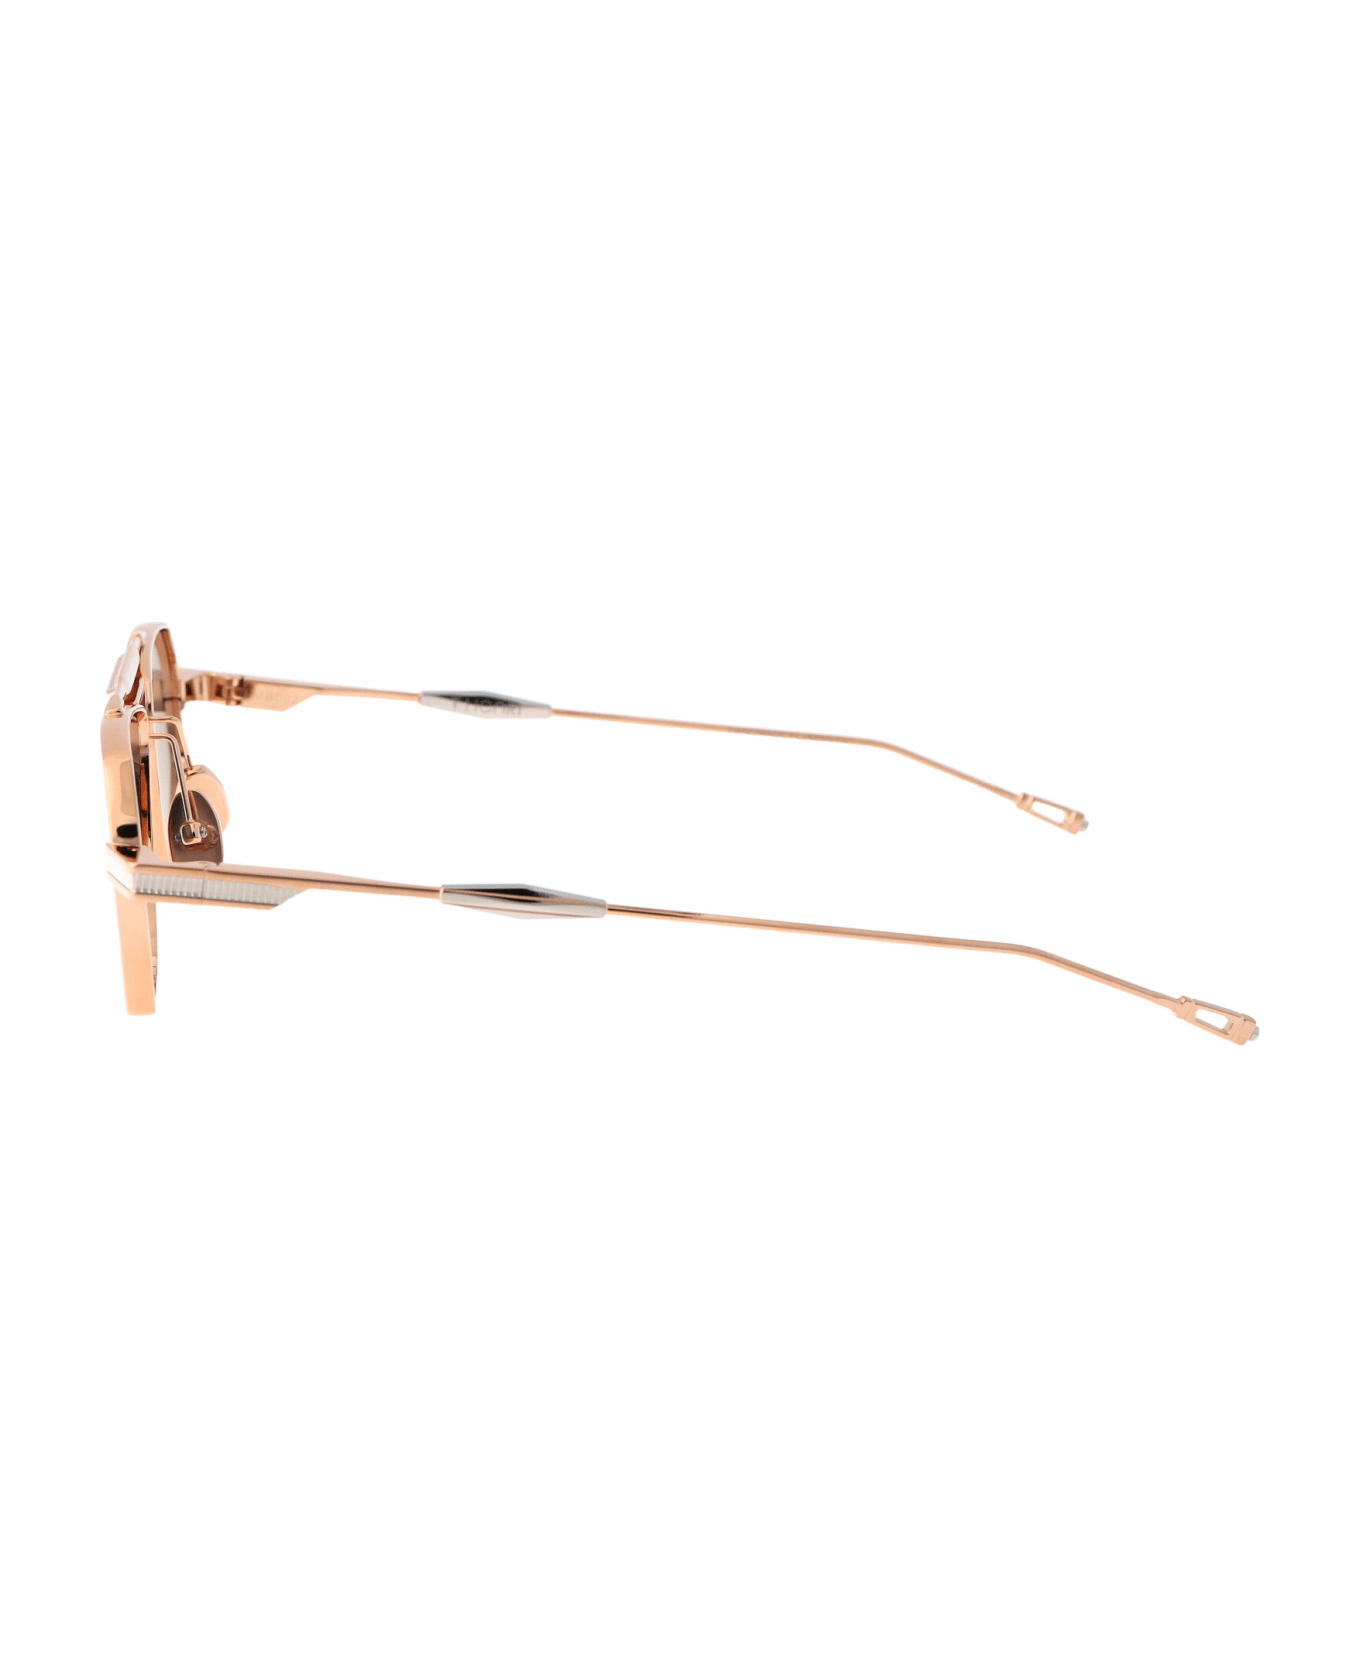 T Henri Longtail Sunglasses - BOUTIQUE EDITION サングラス